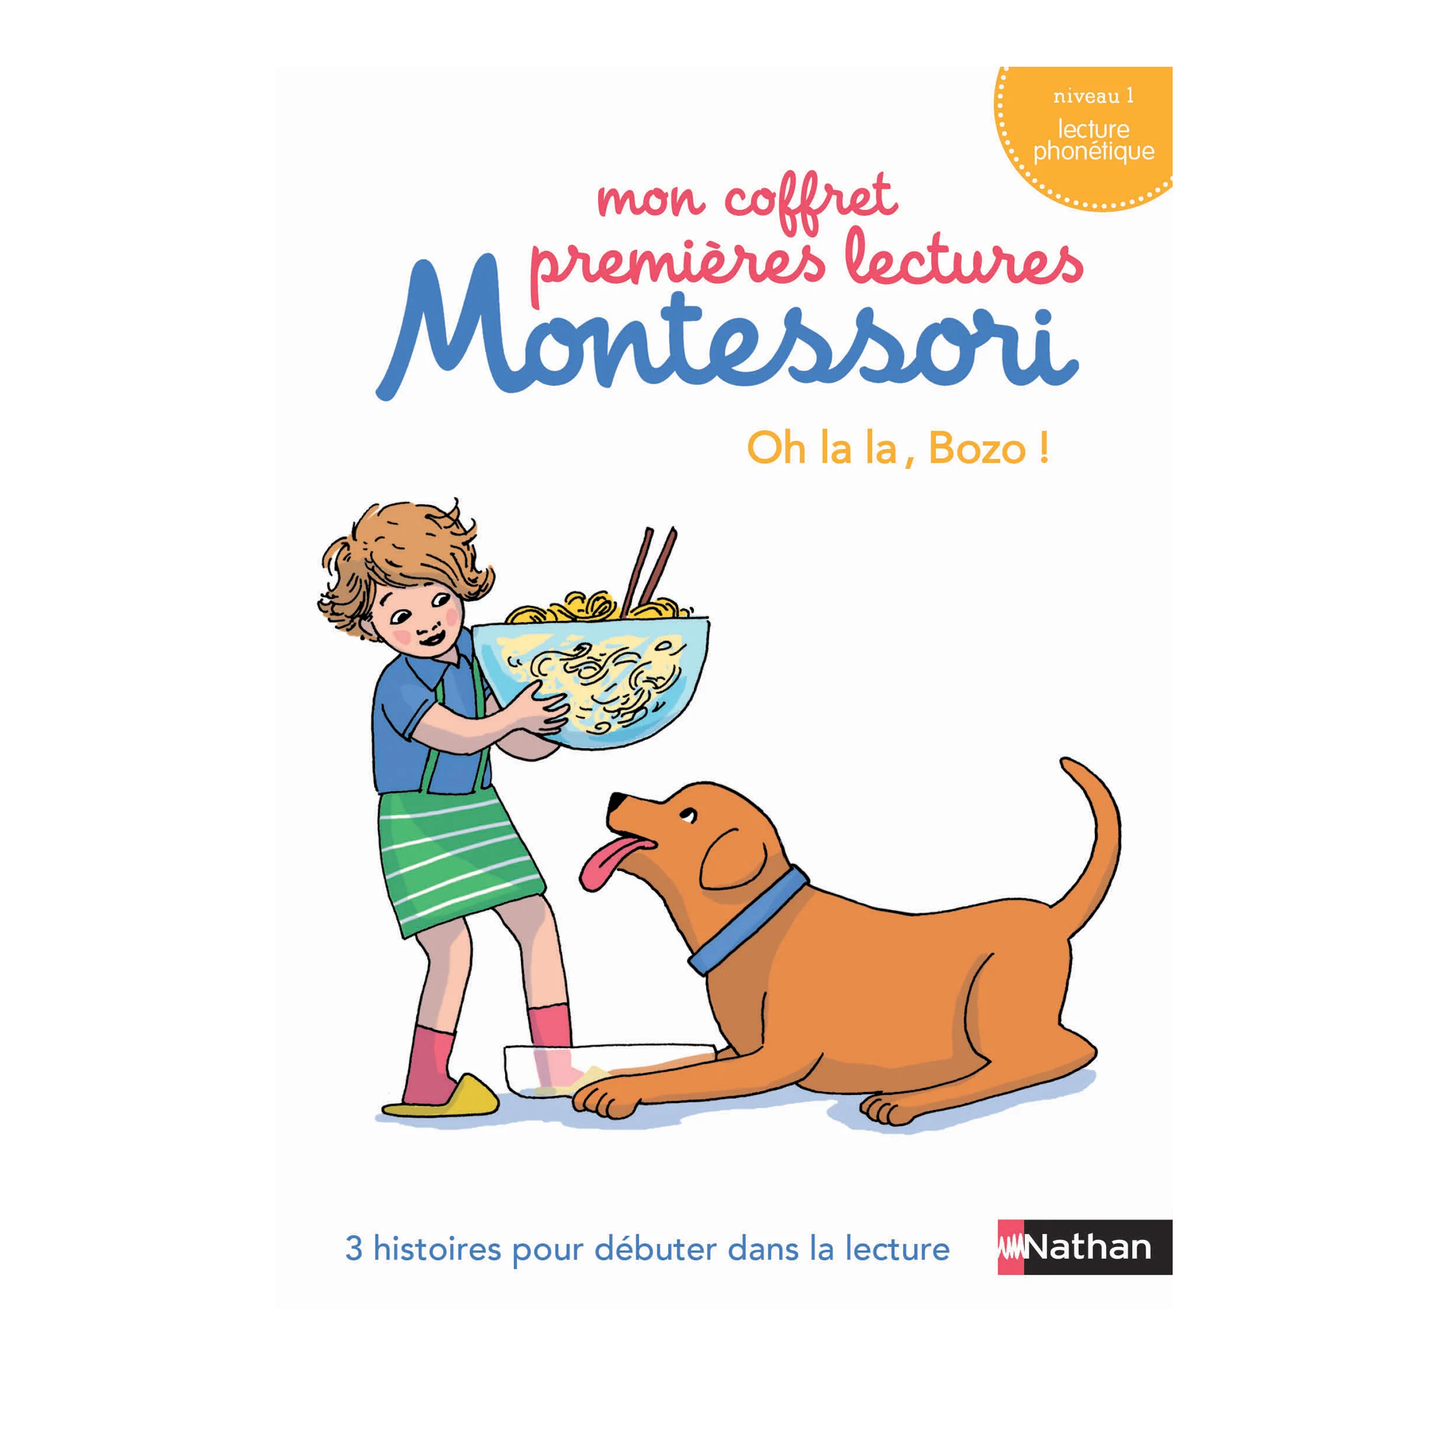 Mon coffret premières lectures Montessori : Oh la la, Bozo ! - Niveau 1 -Nathan